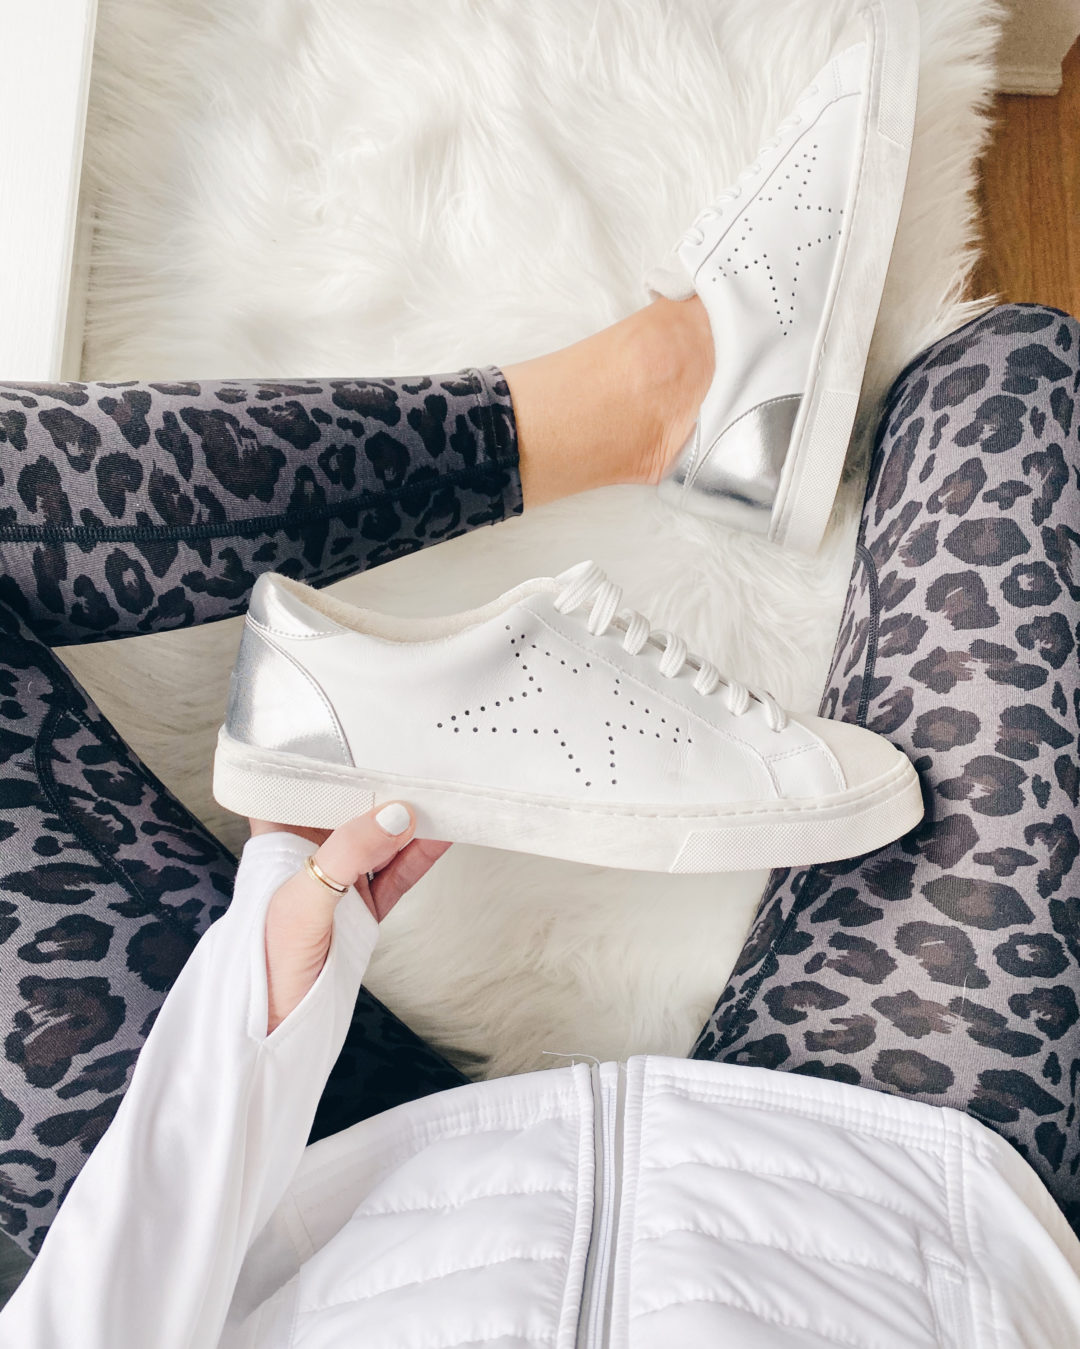 fashion sneakers with leopard leggings - pinteresting plans fashion blog